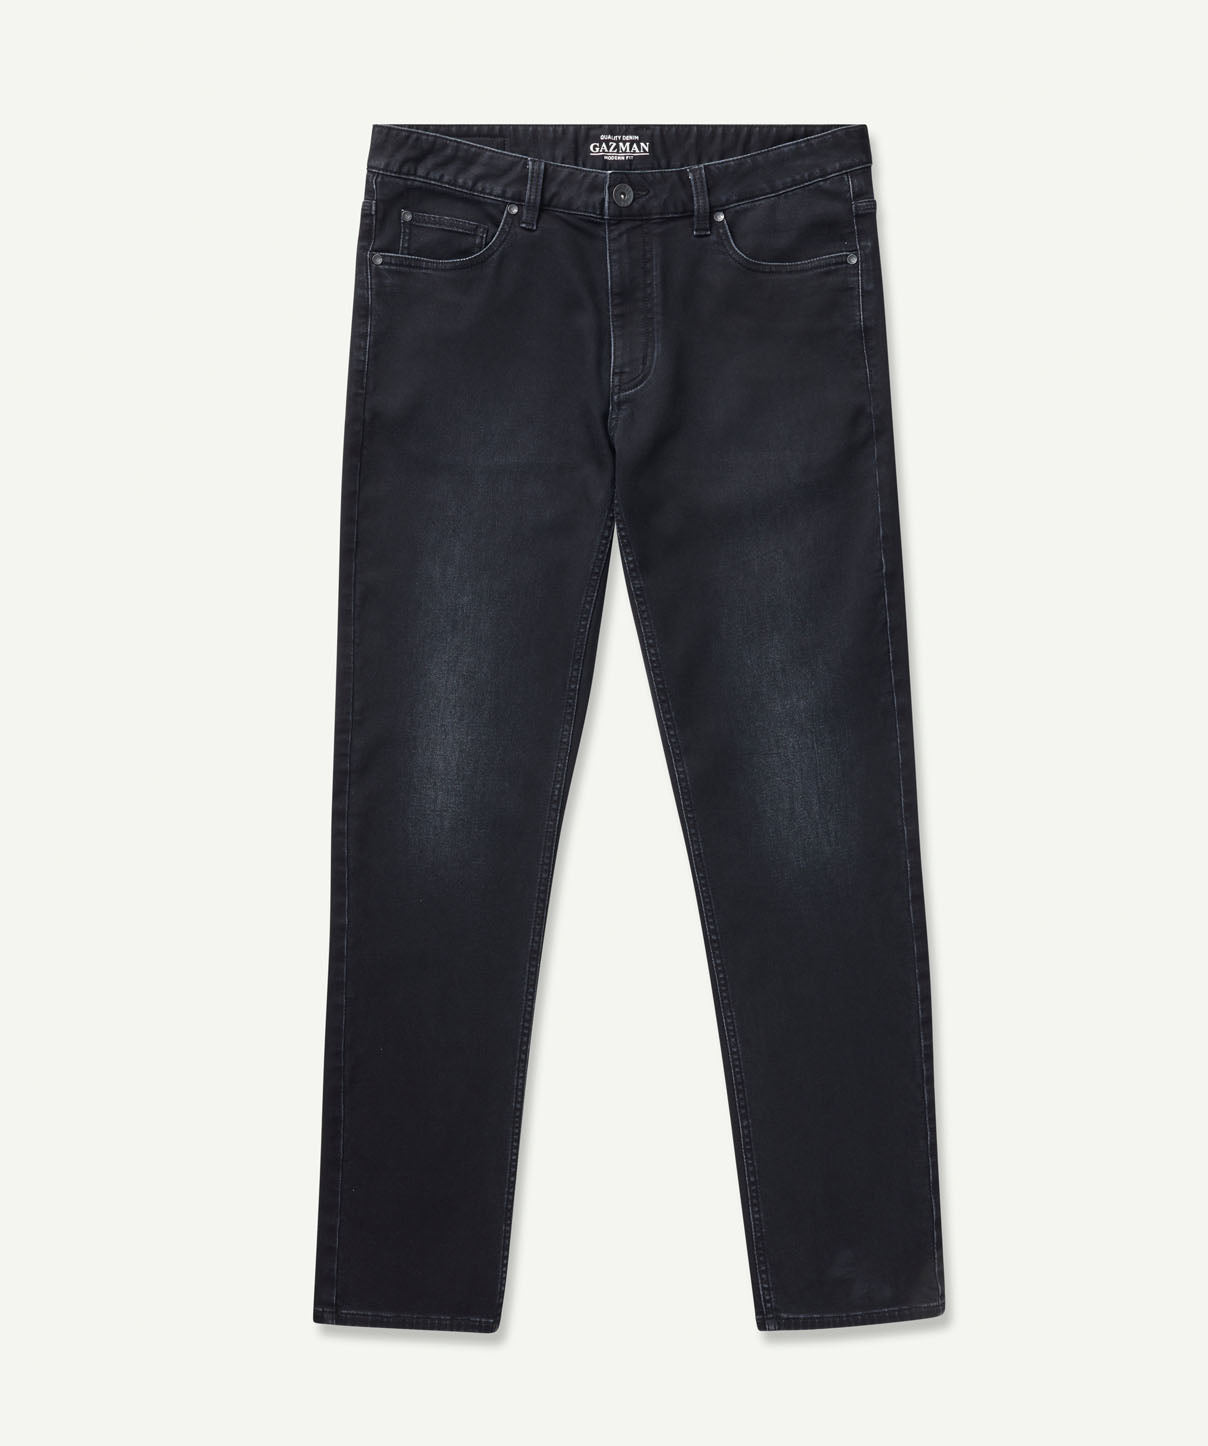 Merricks Knit Modern Fit Jeans - Black - Jeans - GAZMAN